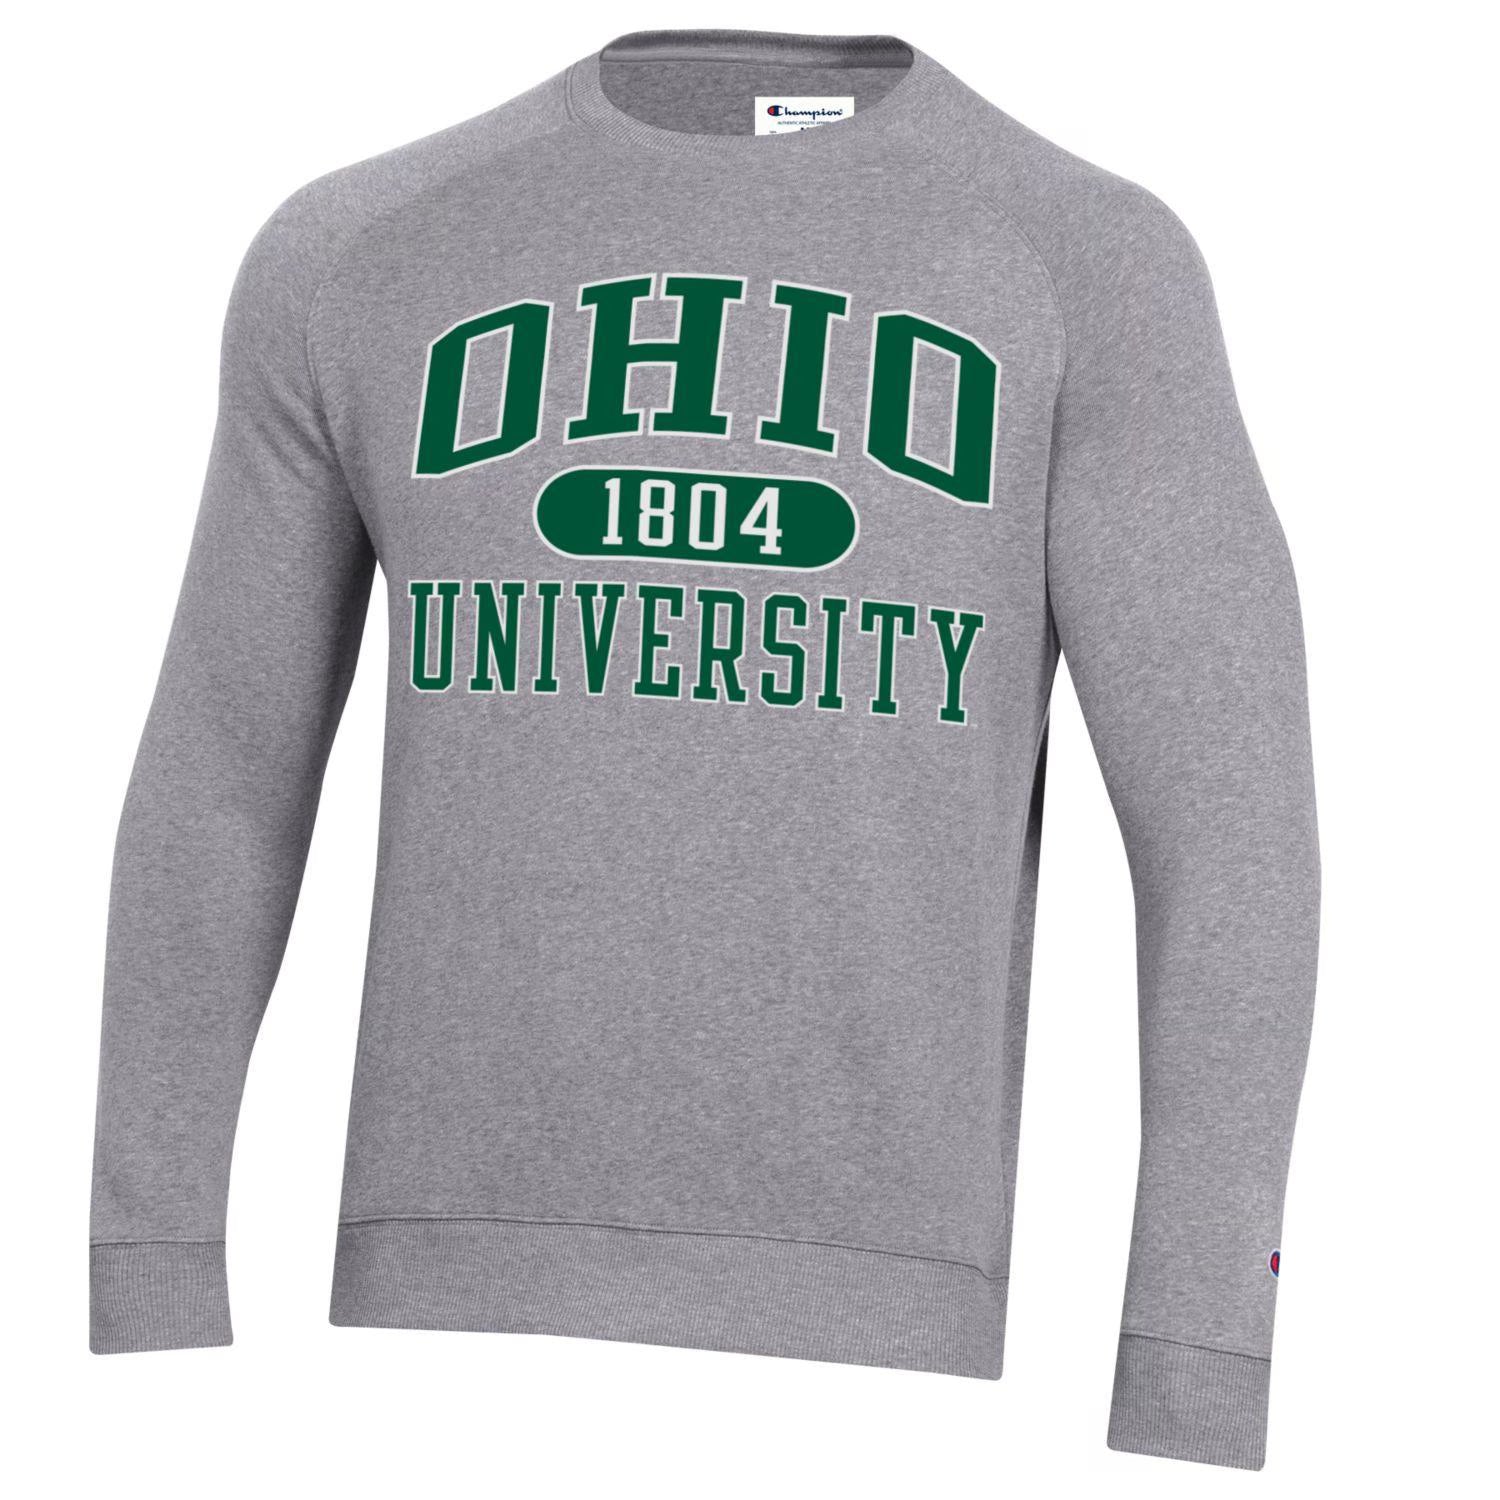 Ohio University Triumph Fleece Raglan Crew in the timeless Heritage Grey color!